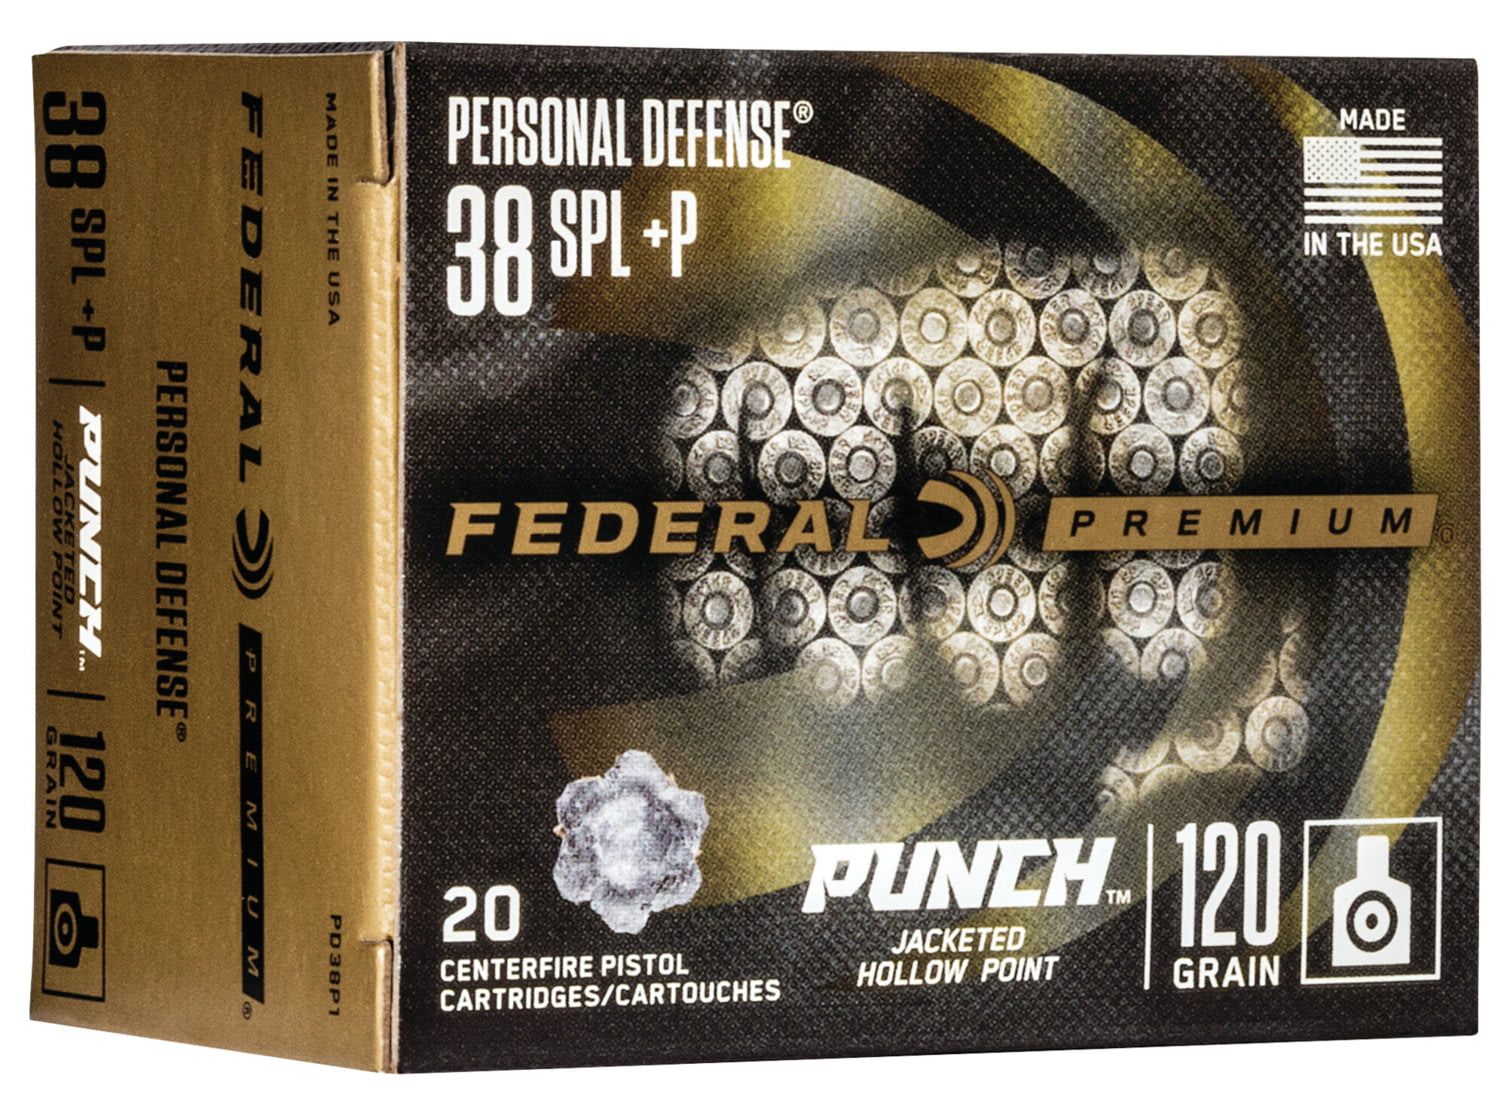 Federal Premium Centerfire Handgun Ammunition .38 Special 120 grain Jacketed Hollow Point Centerfire Pistol Ammunition